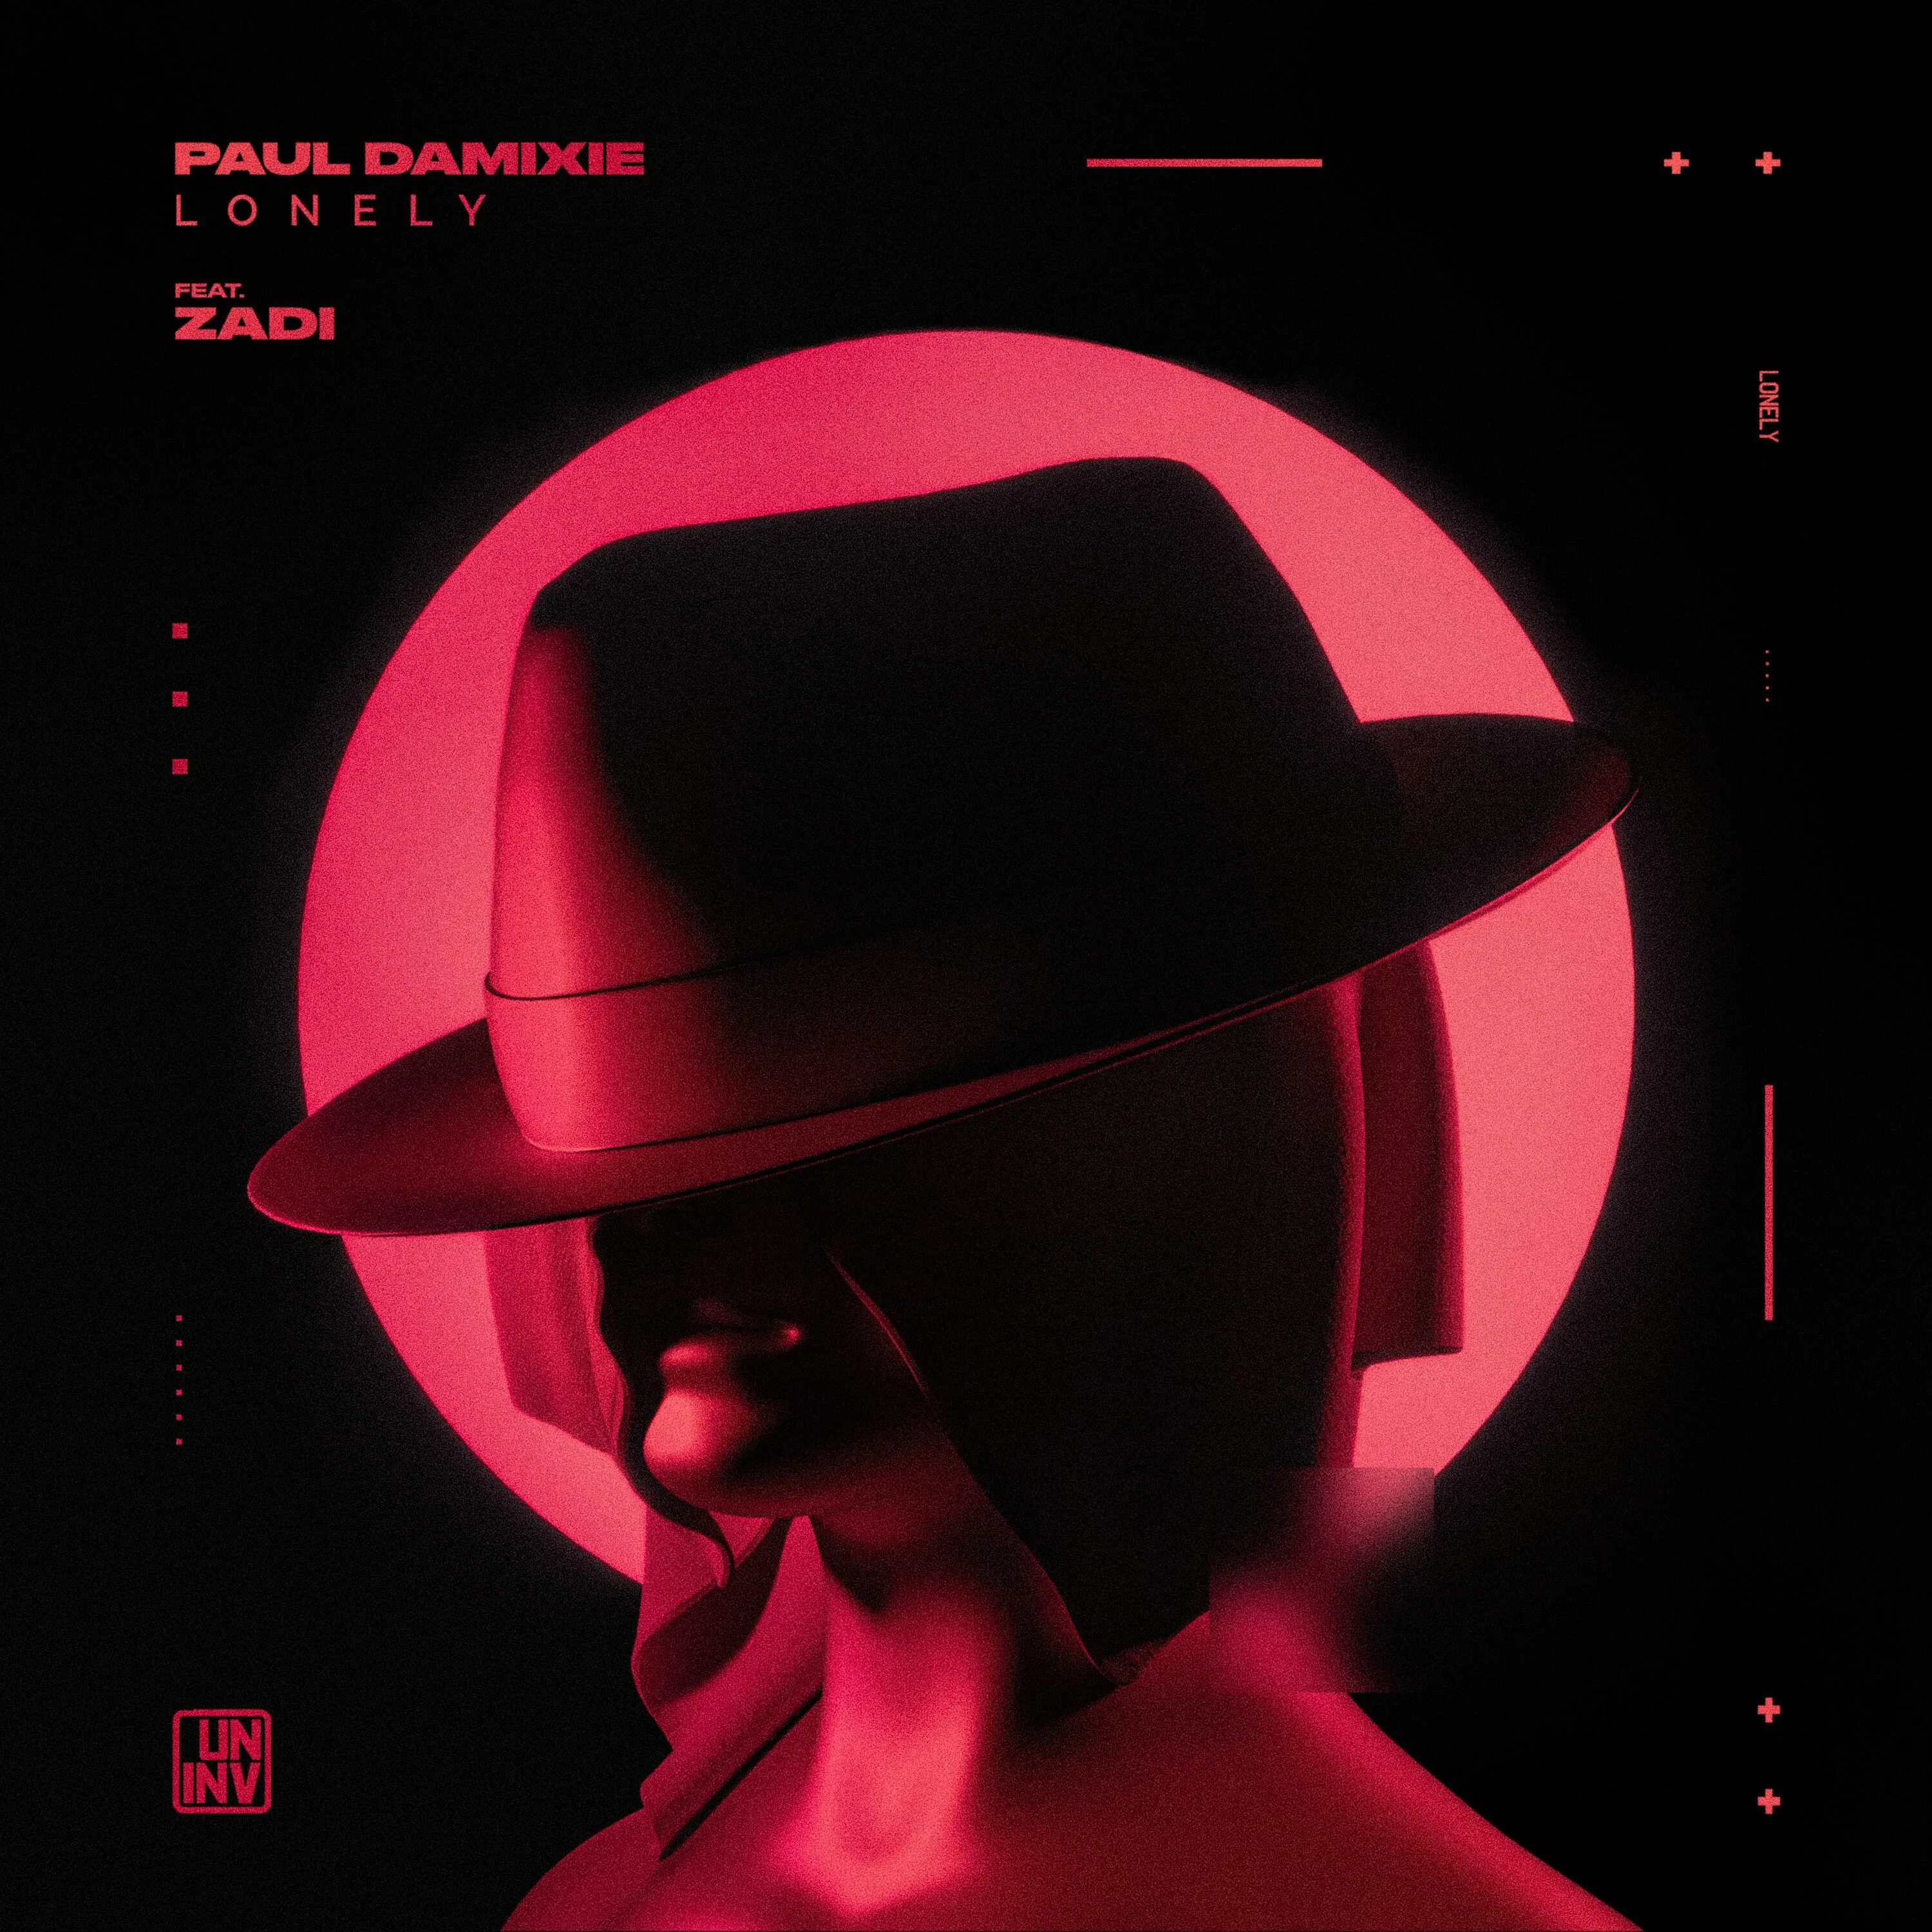 Paul damixie. Paul Damixie & Zadi - Lonely. Selected Music. Диски с песней Lonely Paul Damixie.